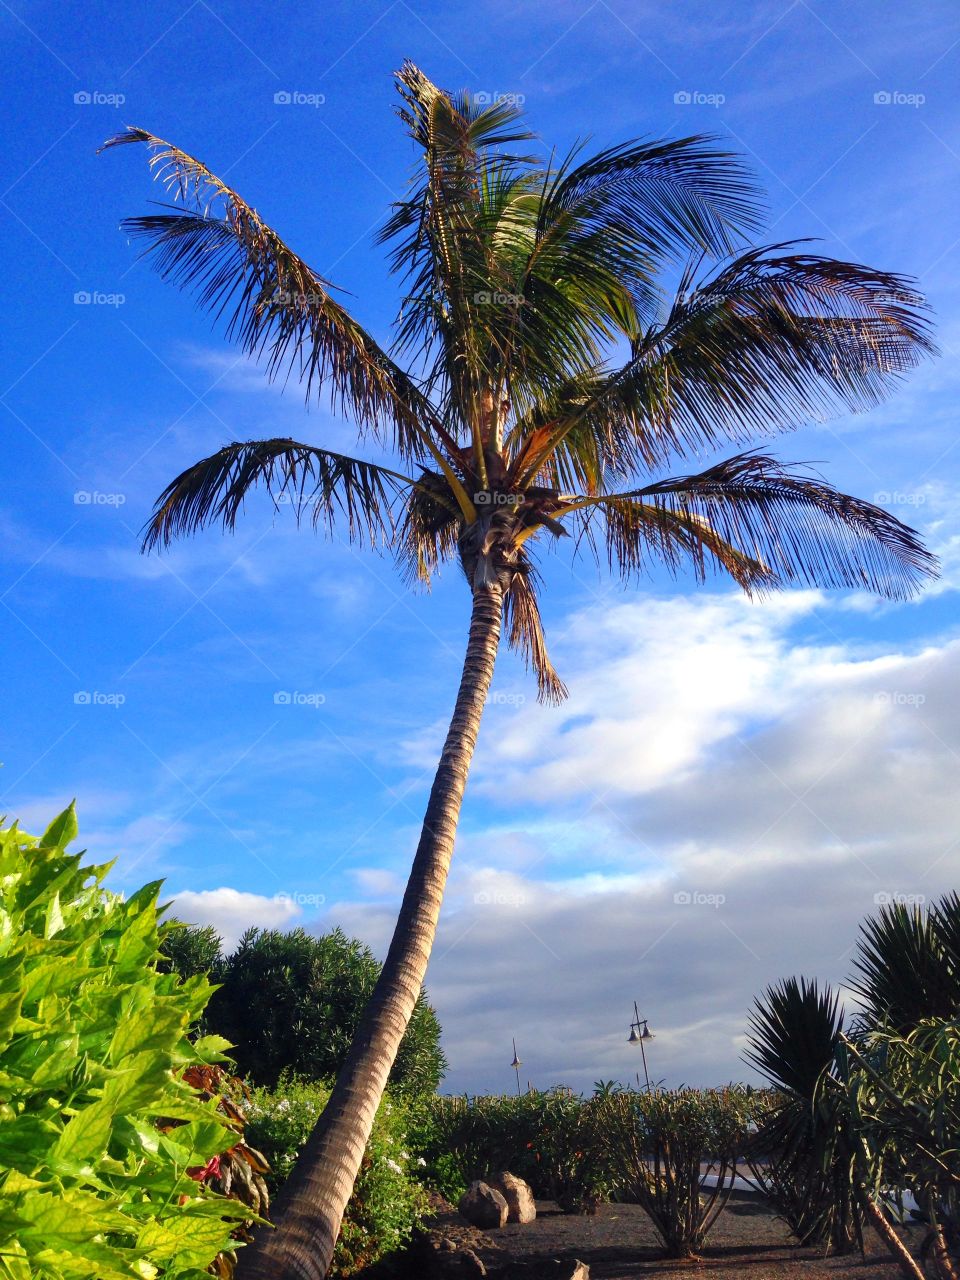 Palm tree, scene, Lanzarote